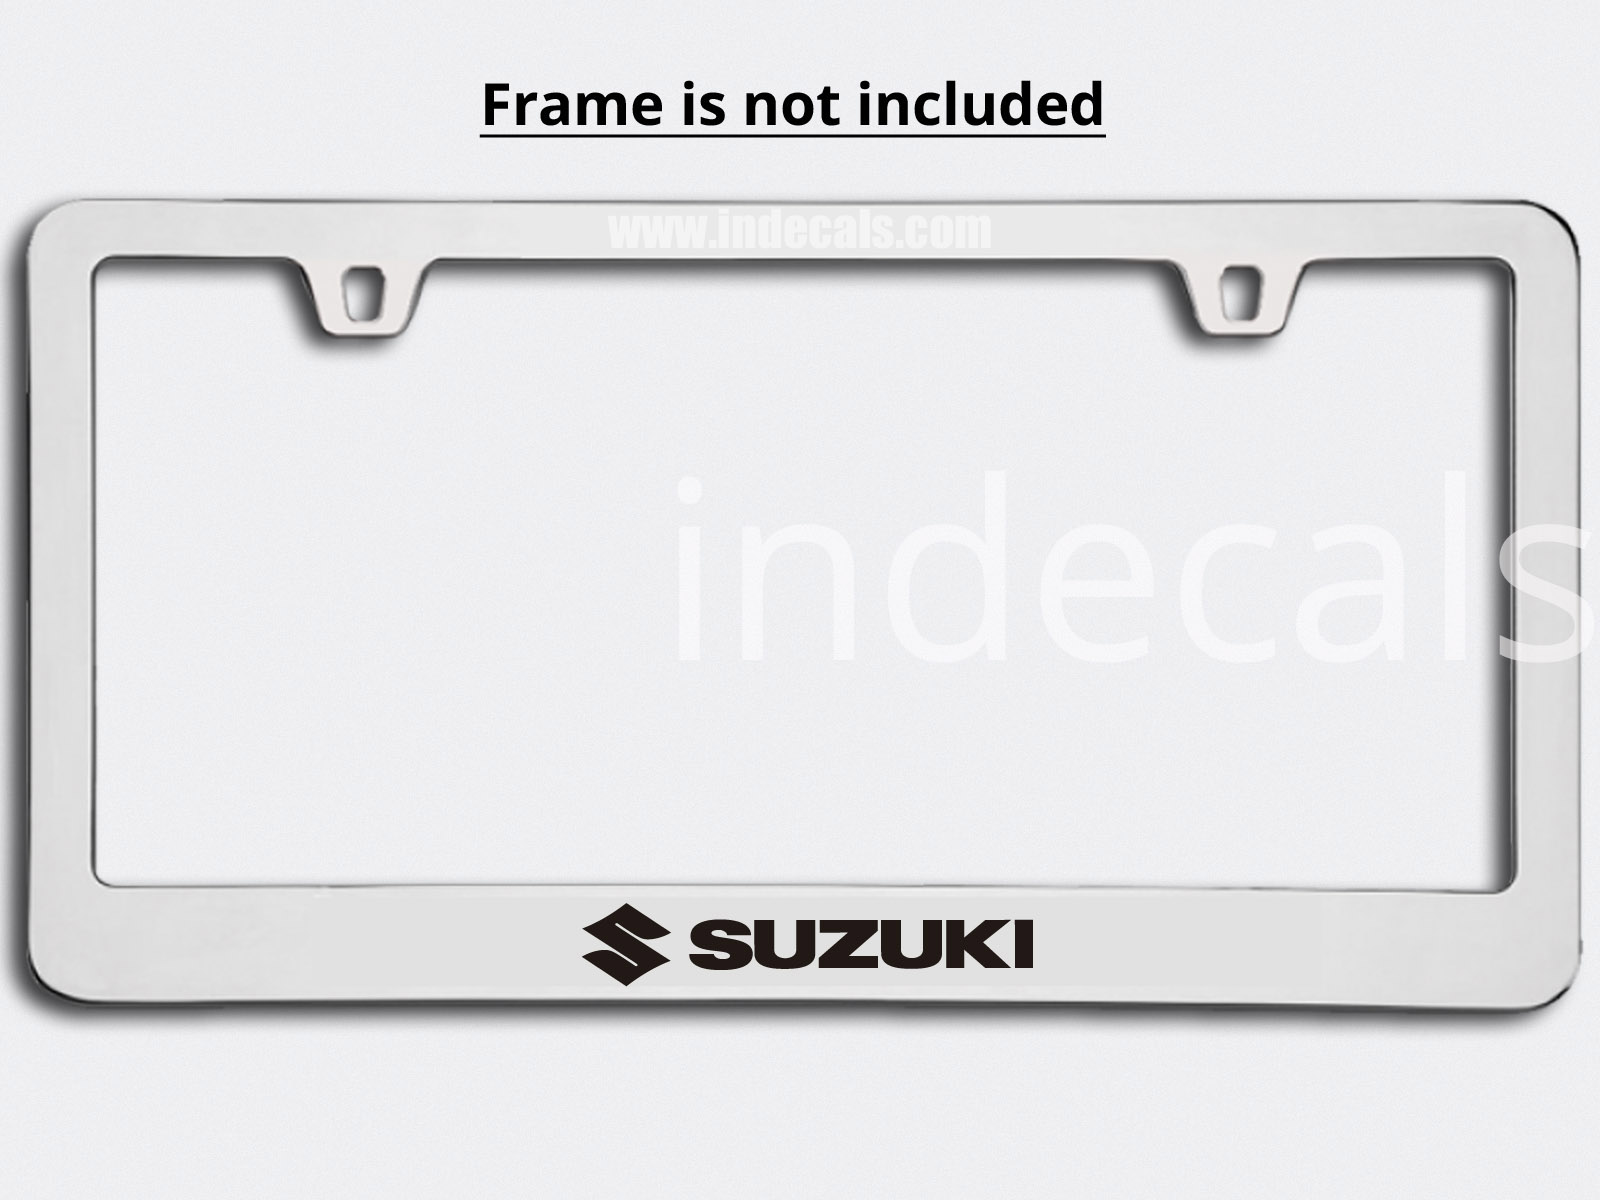 3 x Suzuki Stickers for Plate Frame - Black